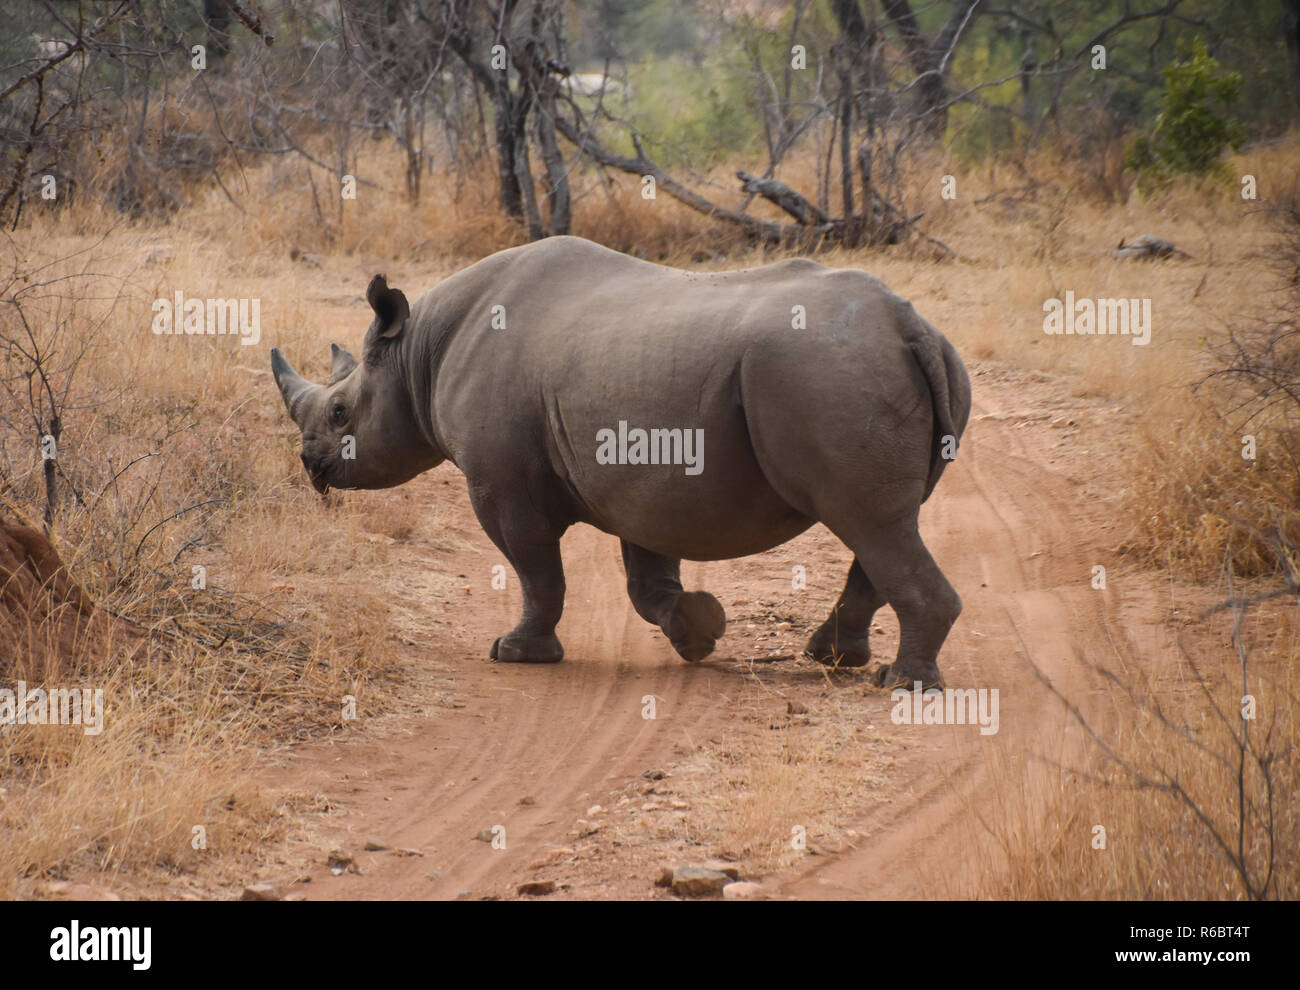 rhino crossing dirt road in game preserve Stock Photo